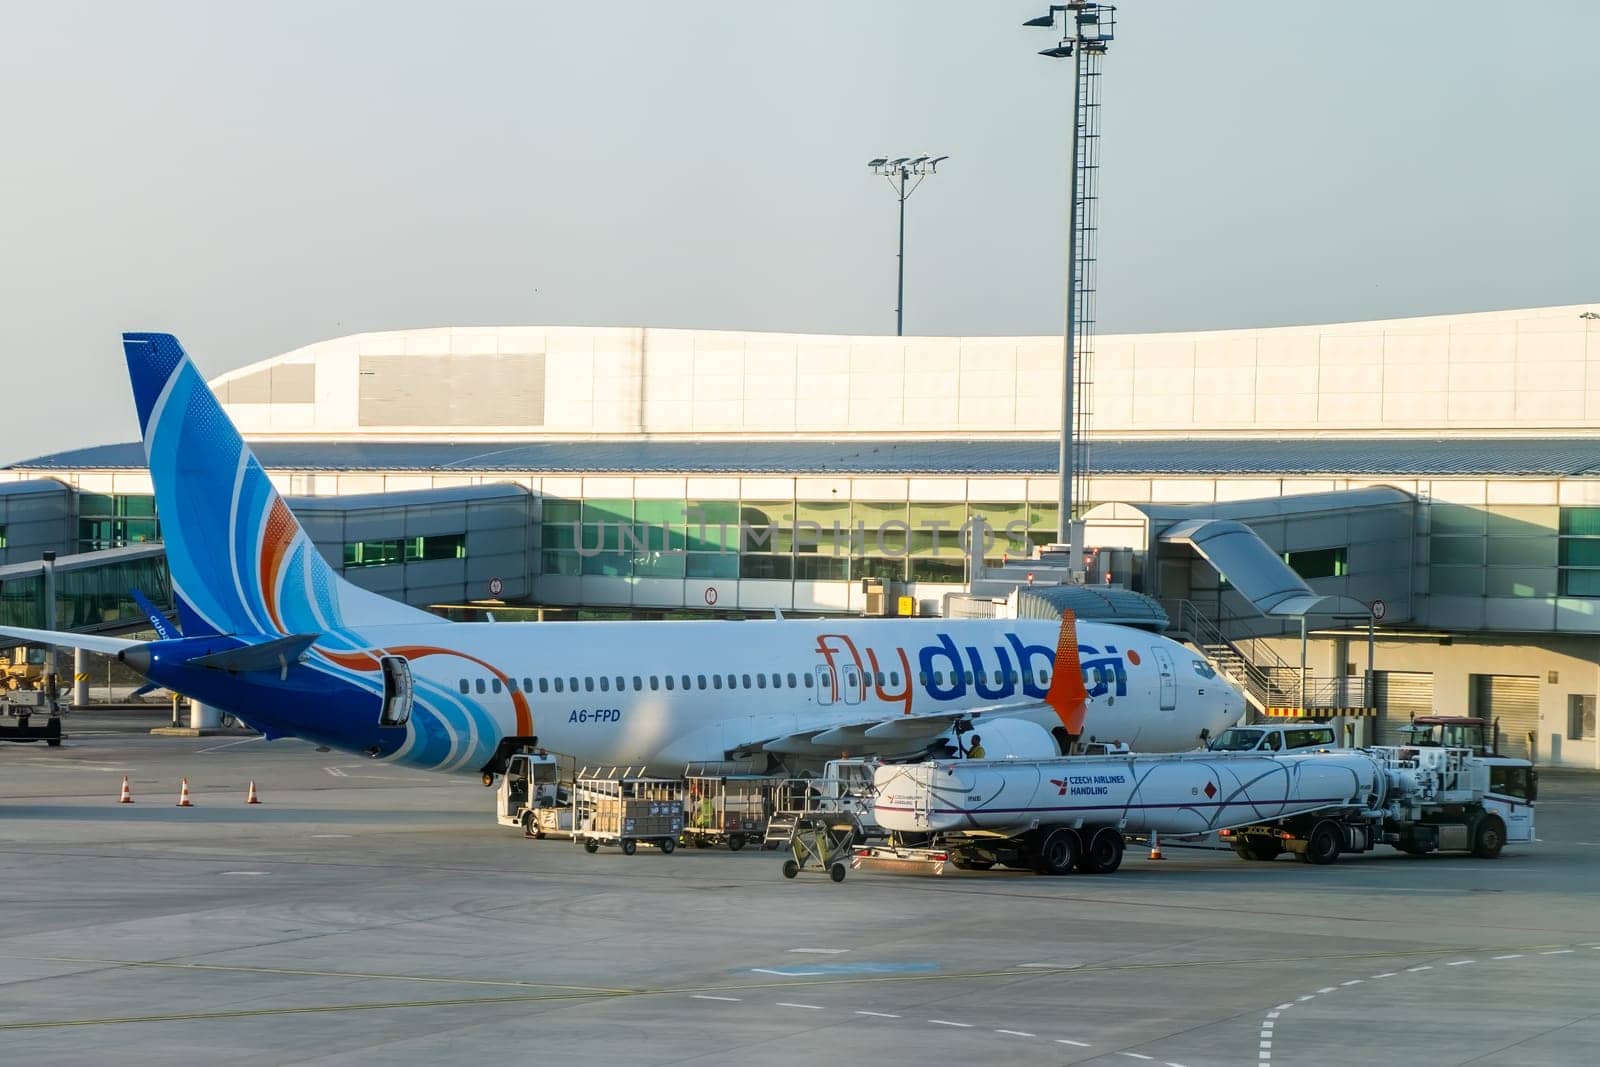 Fly Dubai is prepared for passenger boarding in Prague airport by vladimka